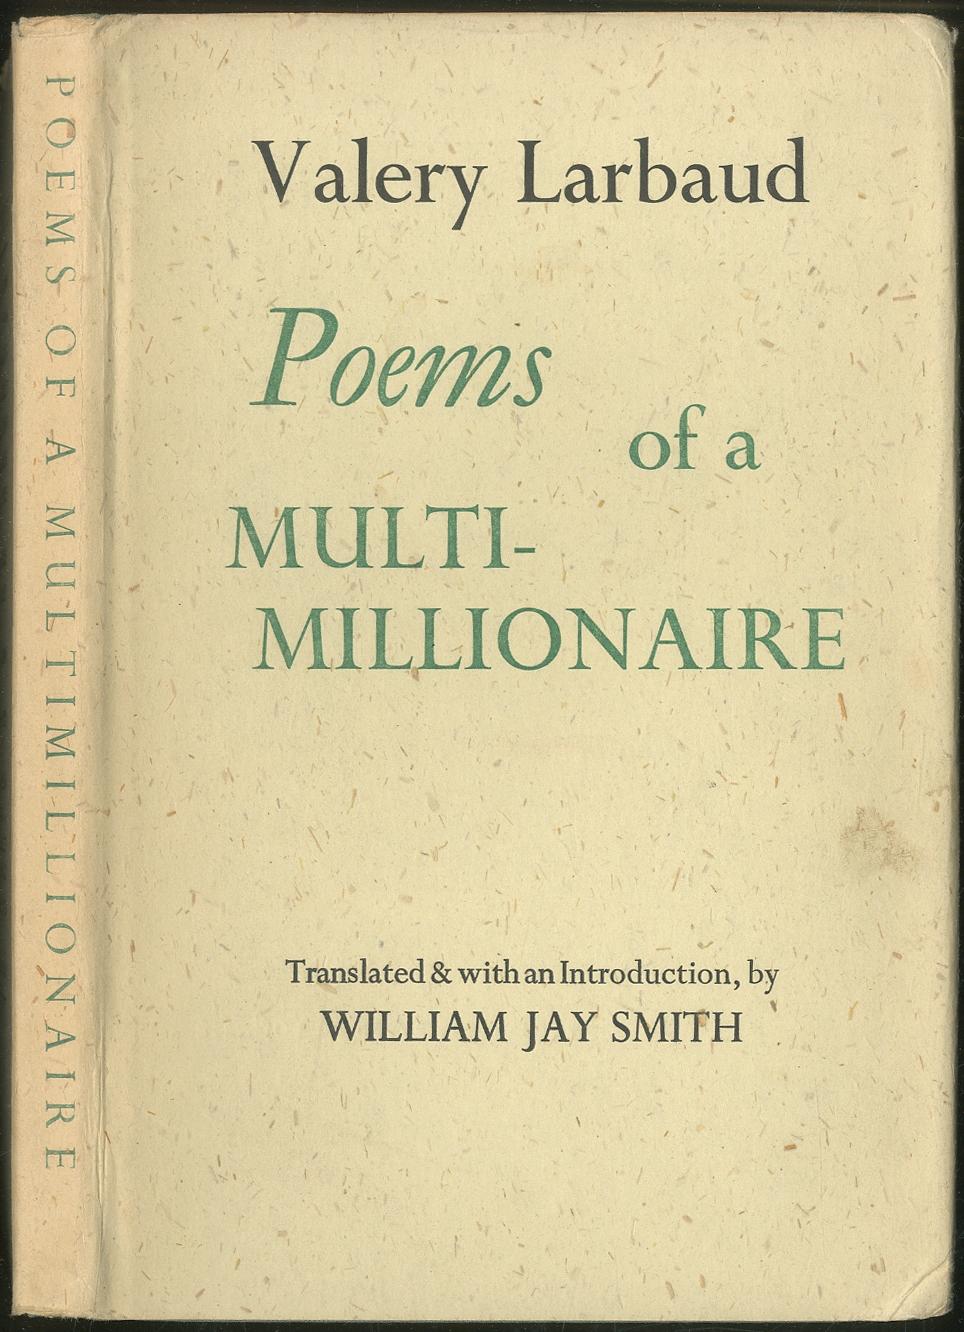 Poems of a Multi-Millionaire